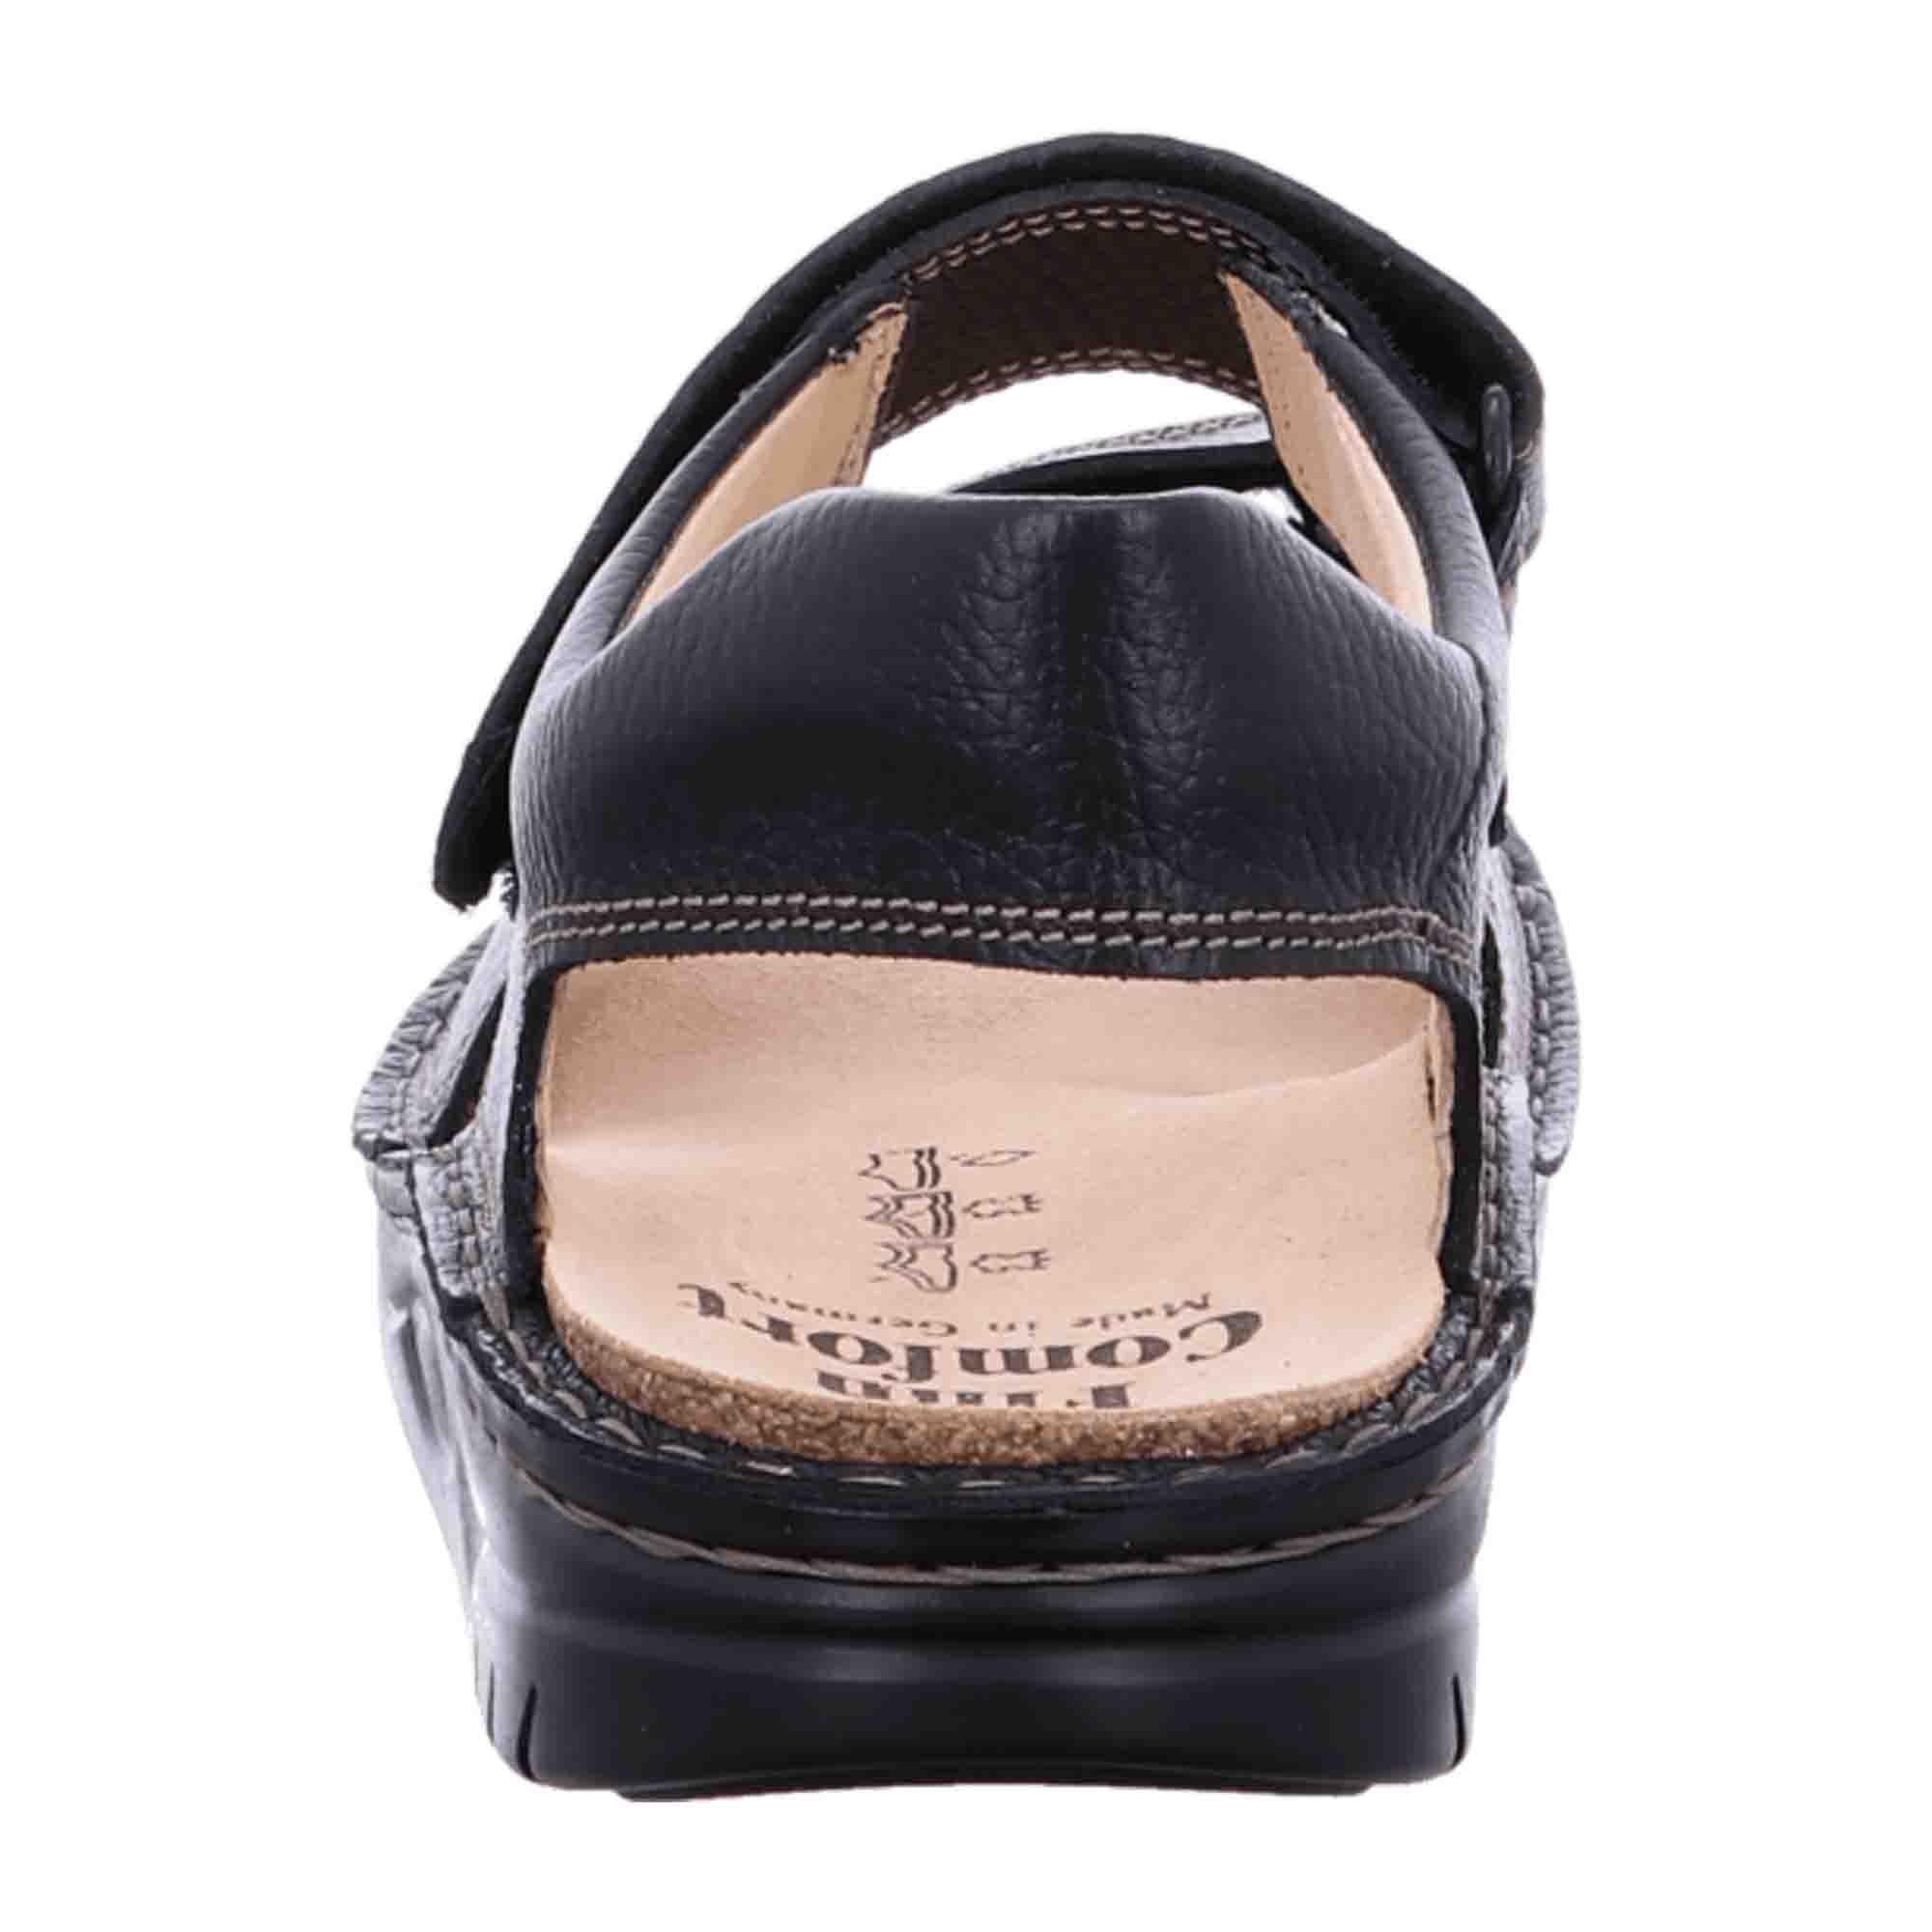 Finn Comfort Perm Men's Black Comfort Shoes – Stylish & Durable